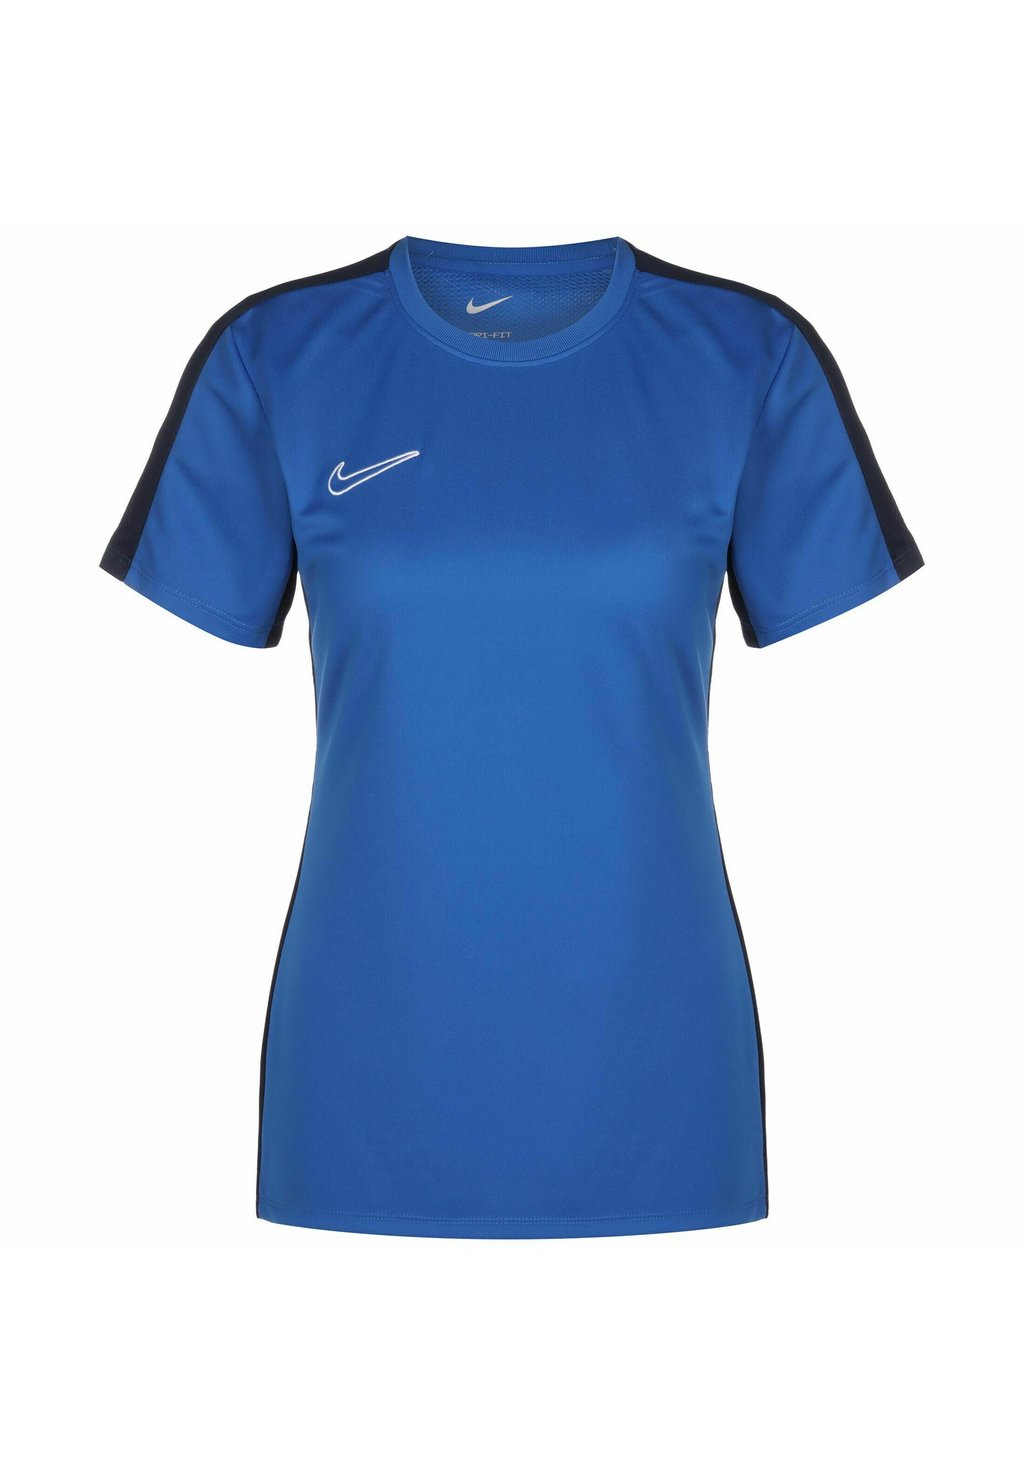 Спортивная футболка DRI-FIT ACADEMY 23 Nike, цвет royal blue/obsidian white